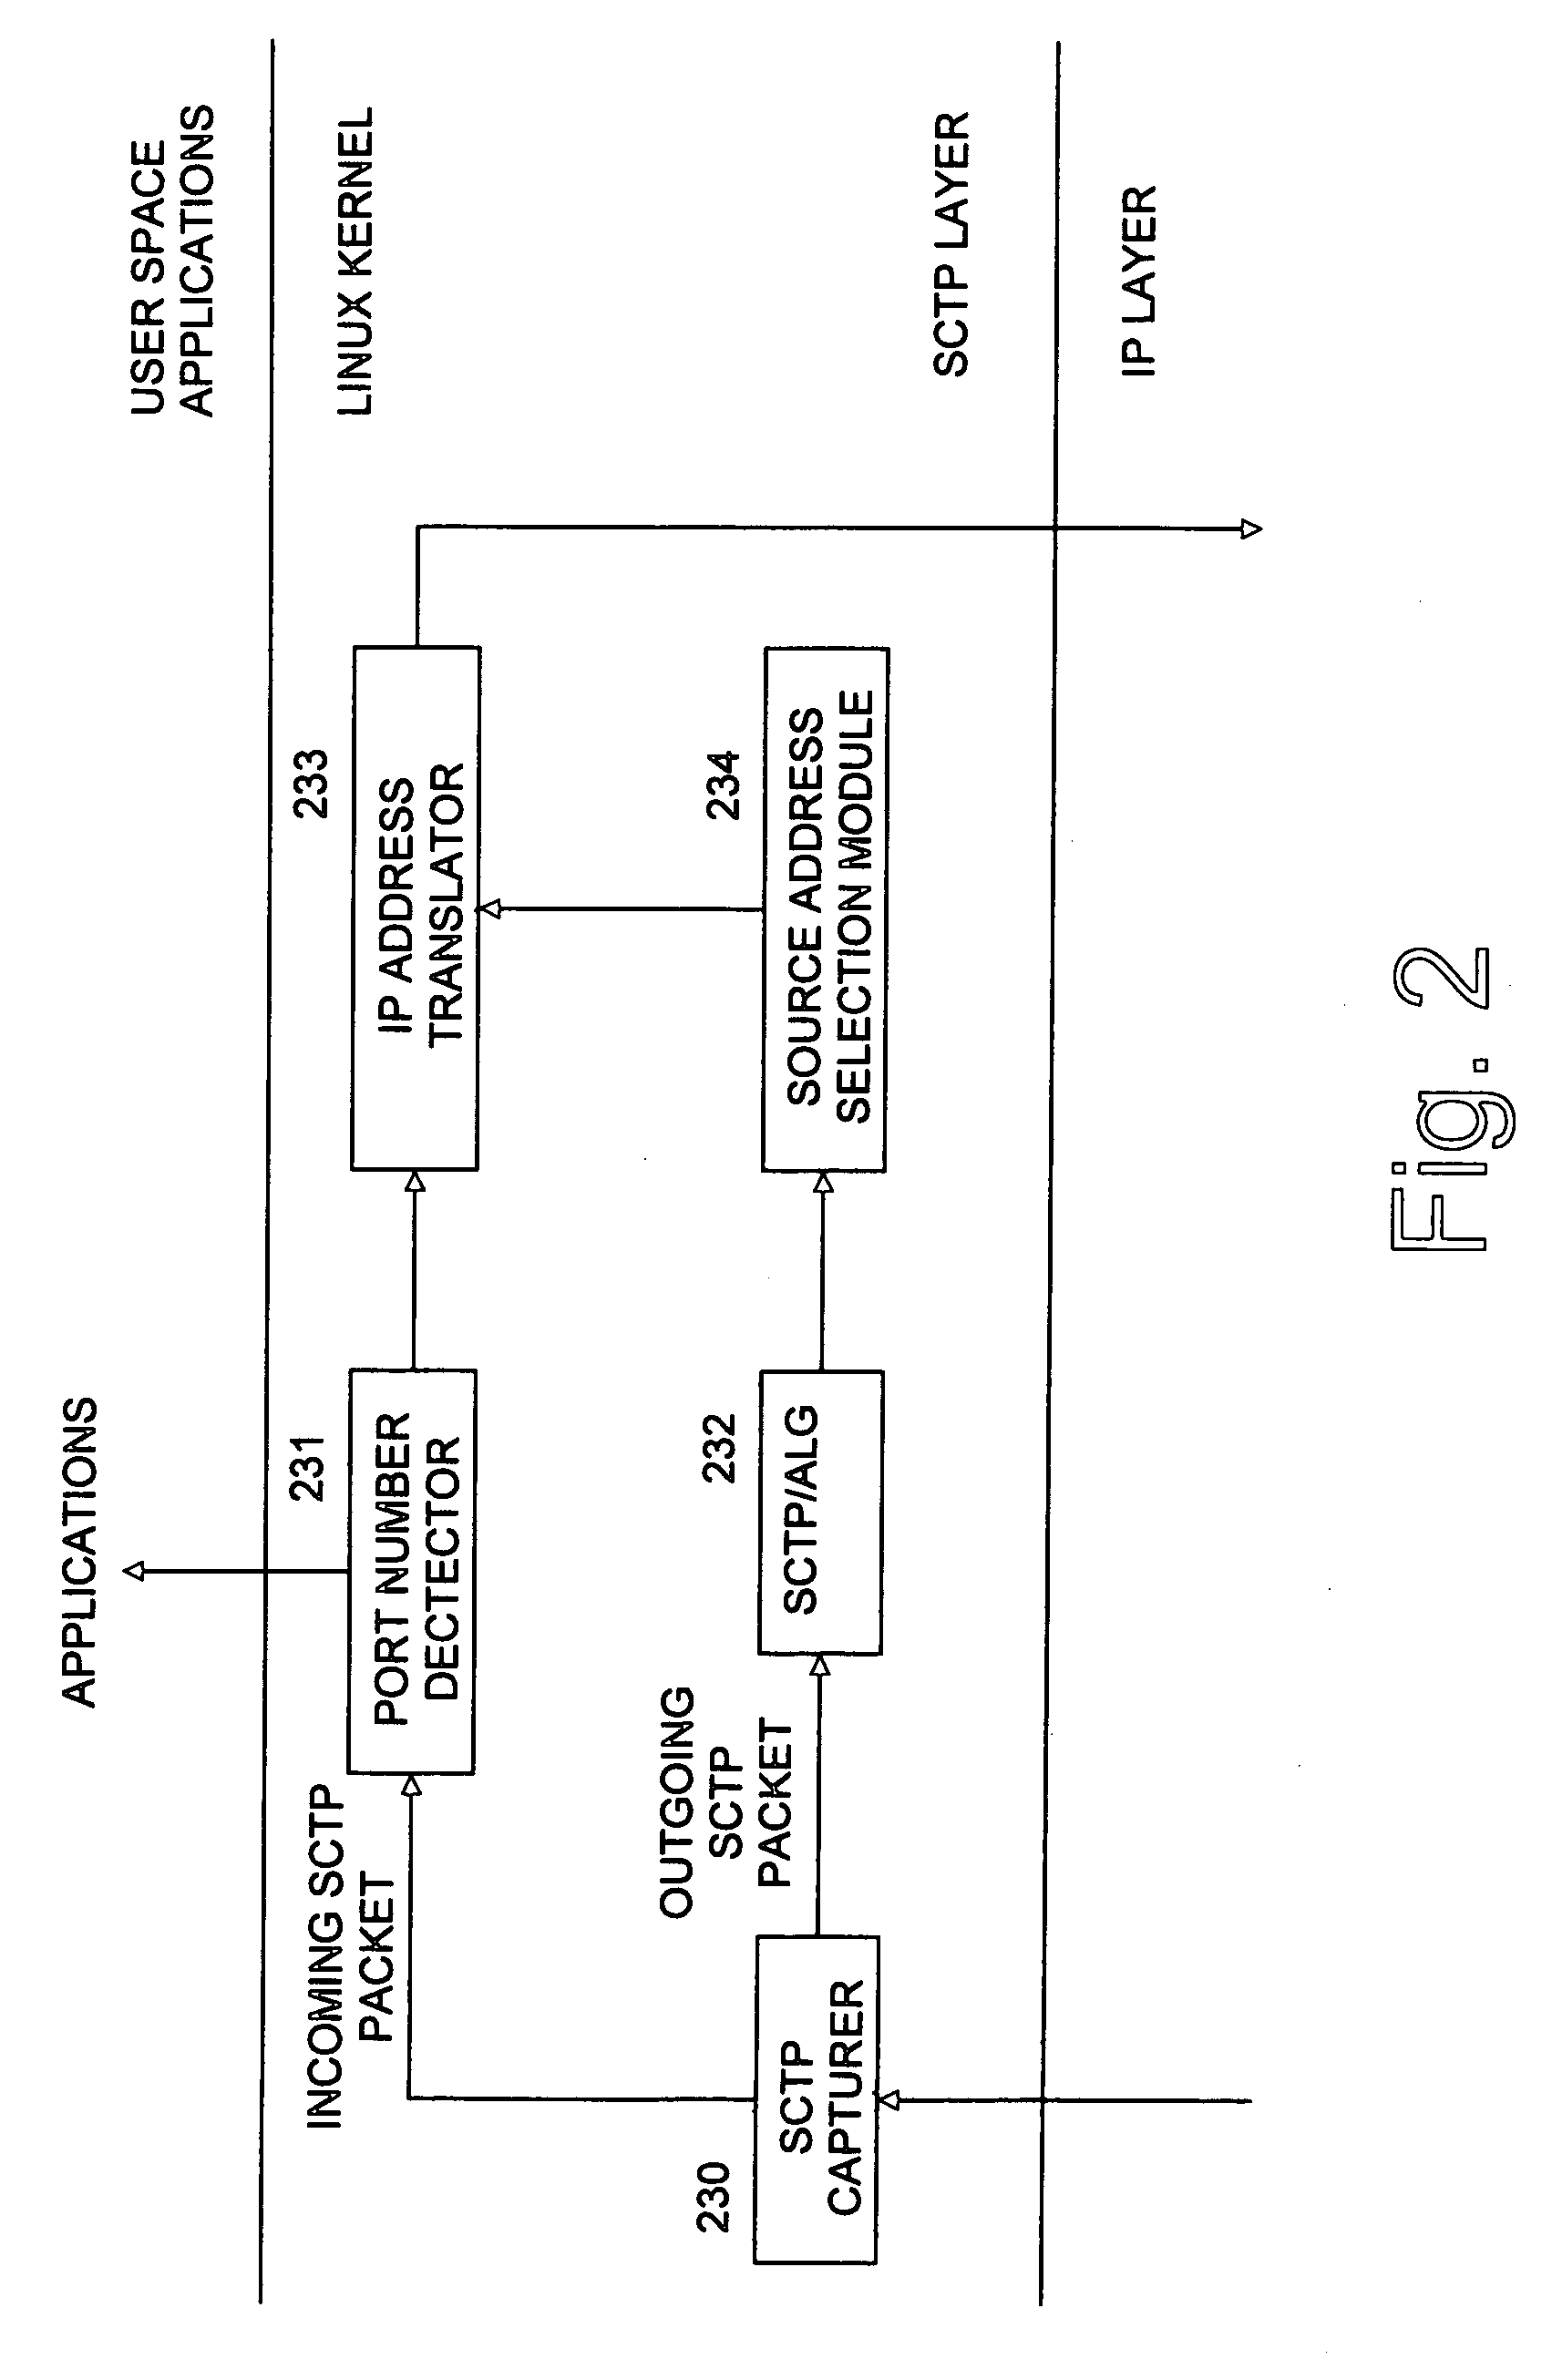 Multi homing transport protocol on a multi-processor arrangement